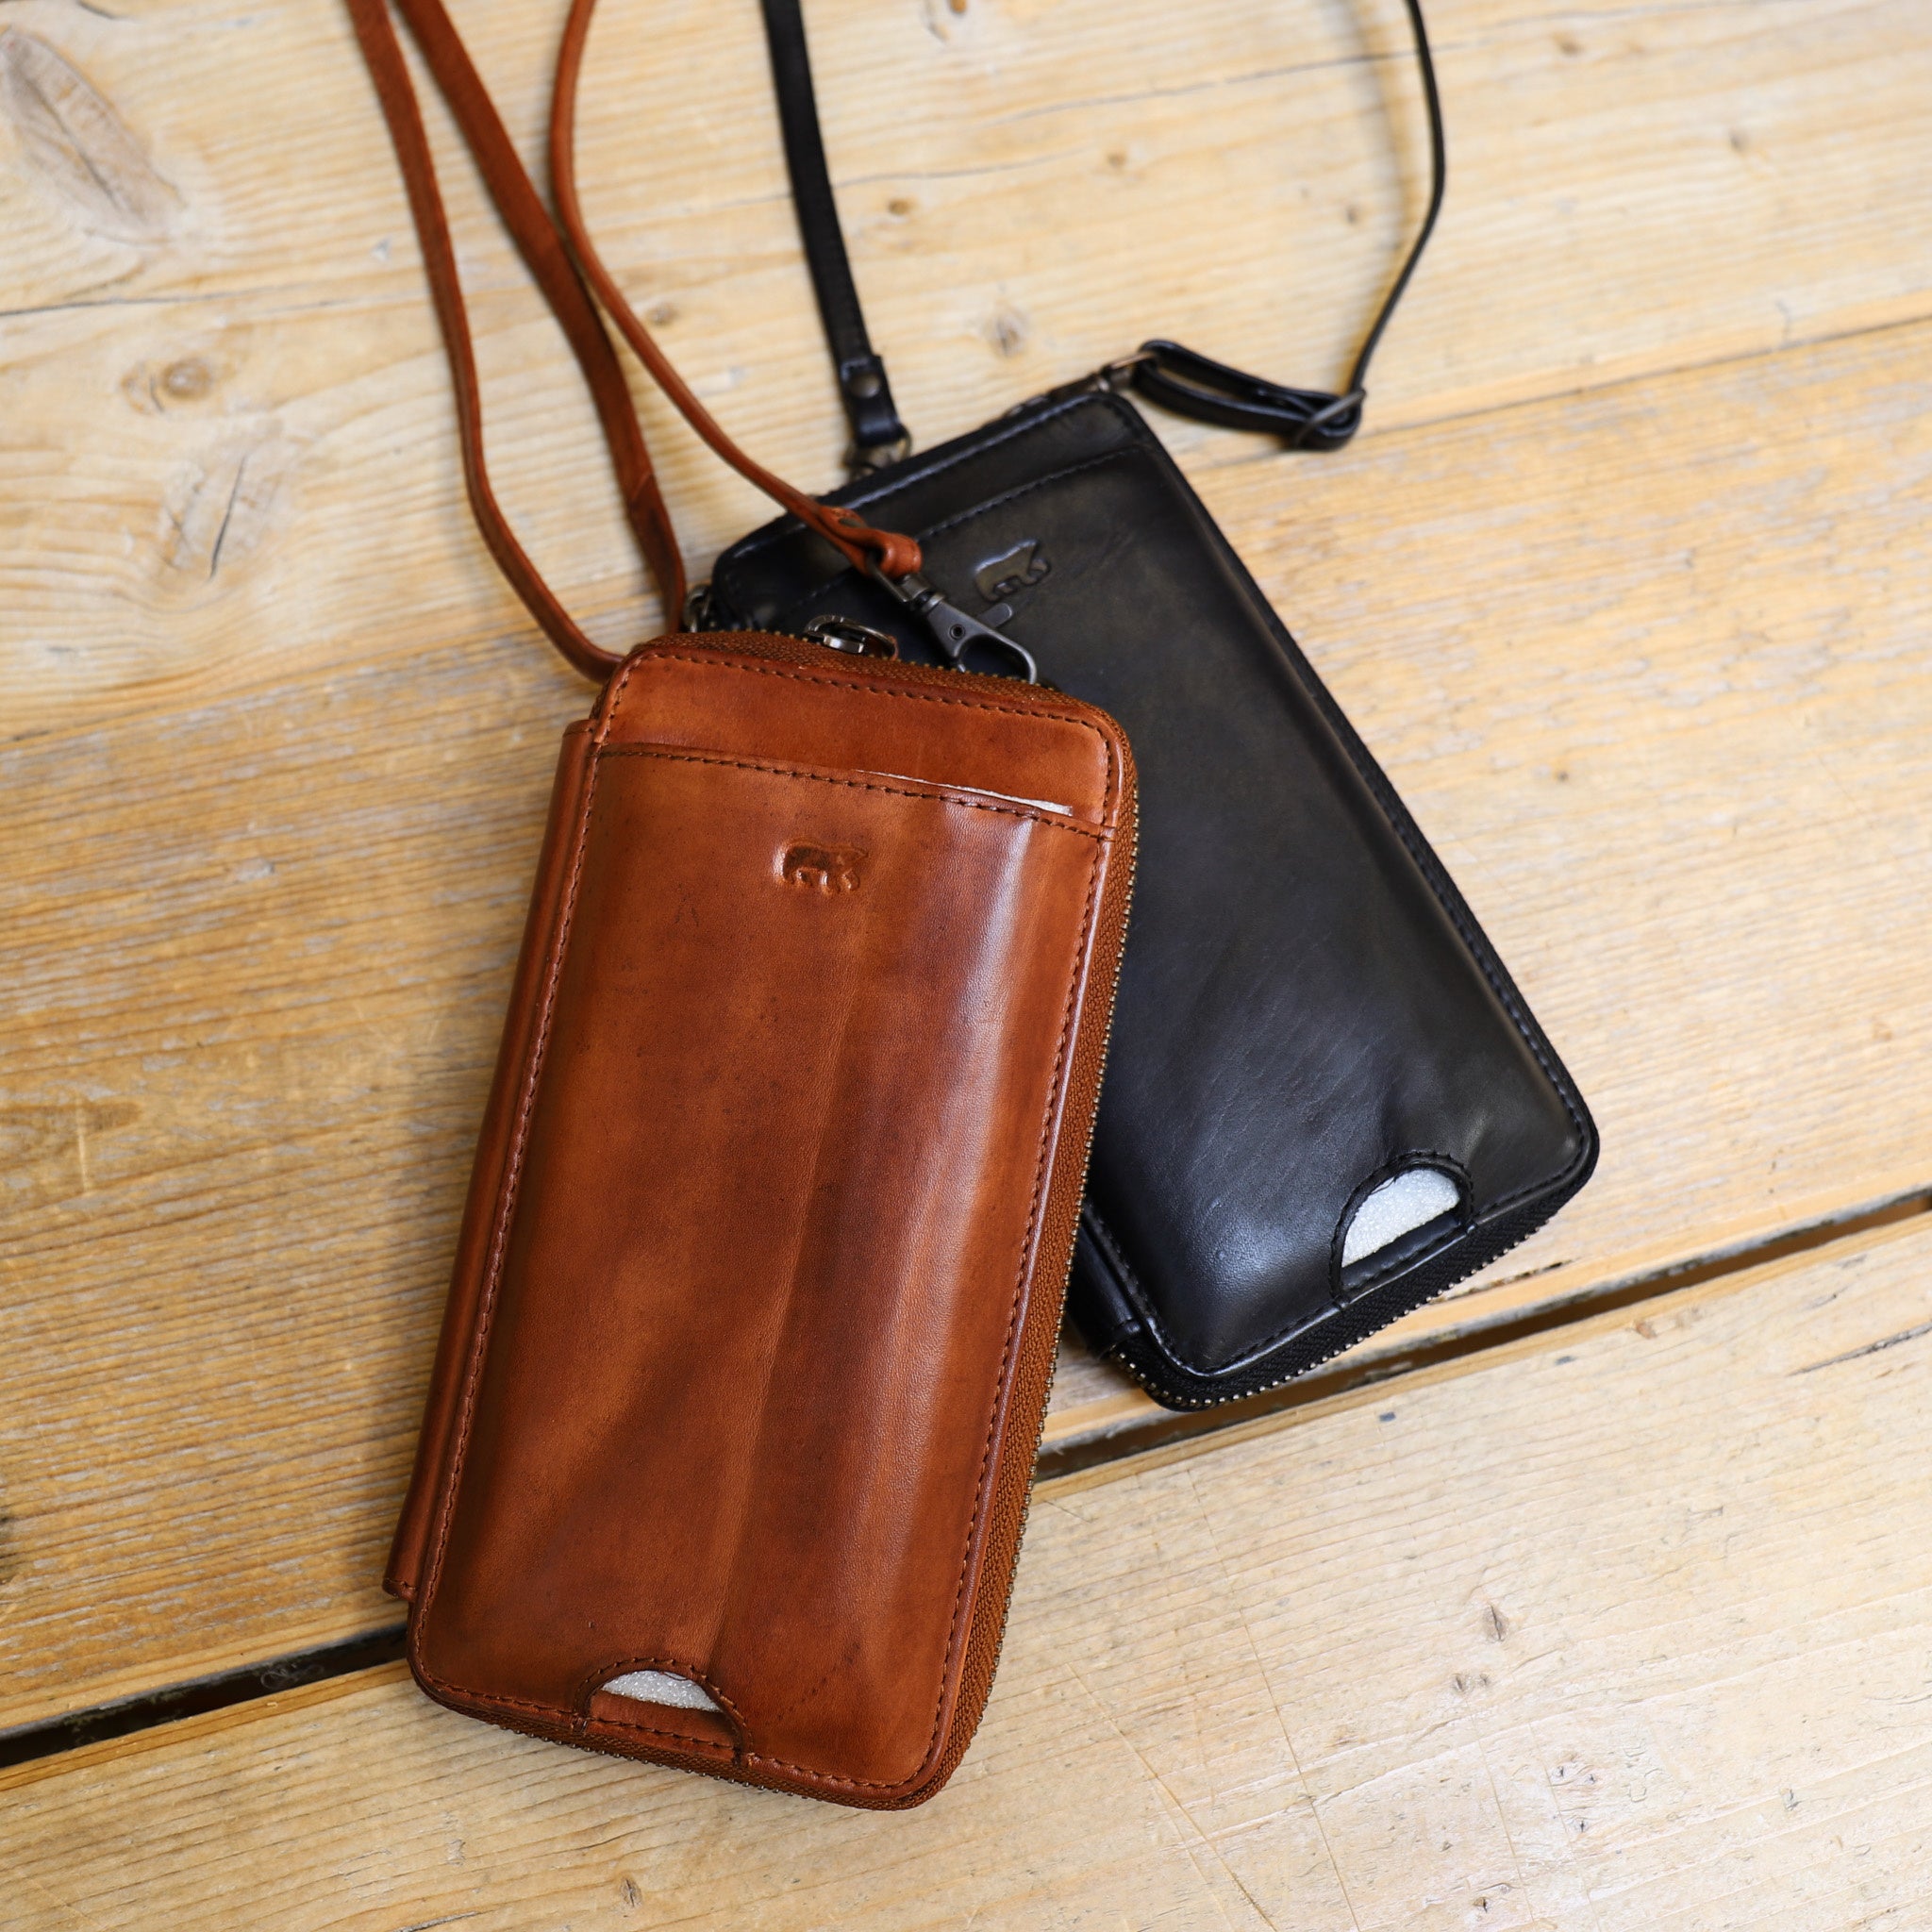 Phone bag 'Anniek' cognac - CL 18860